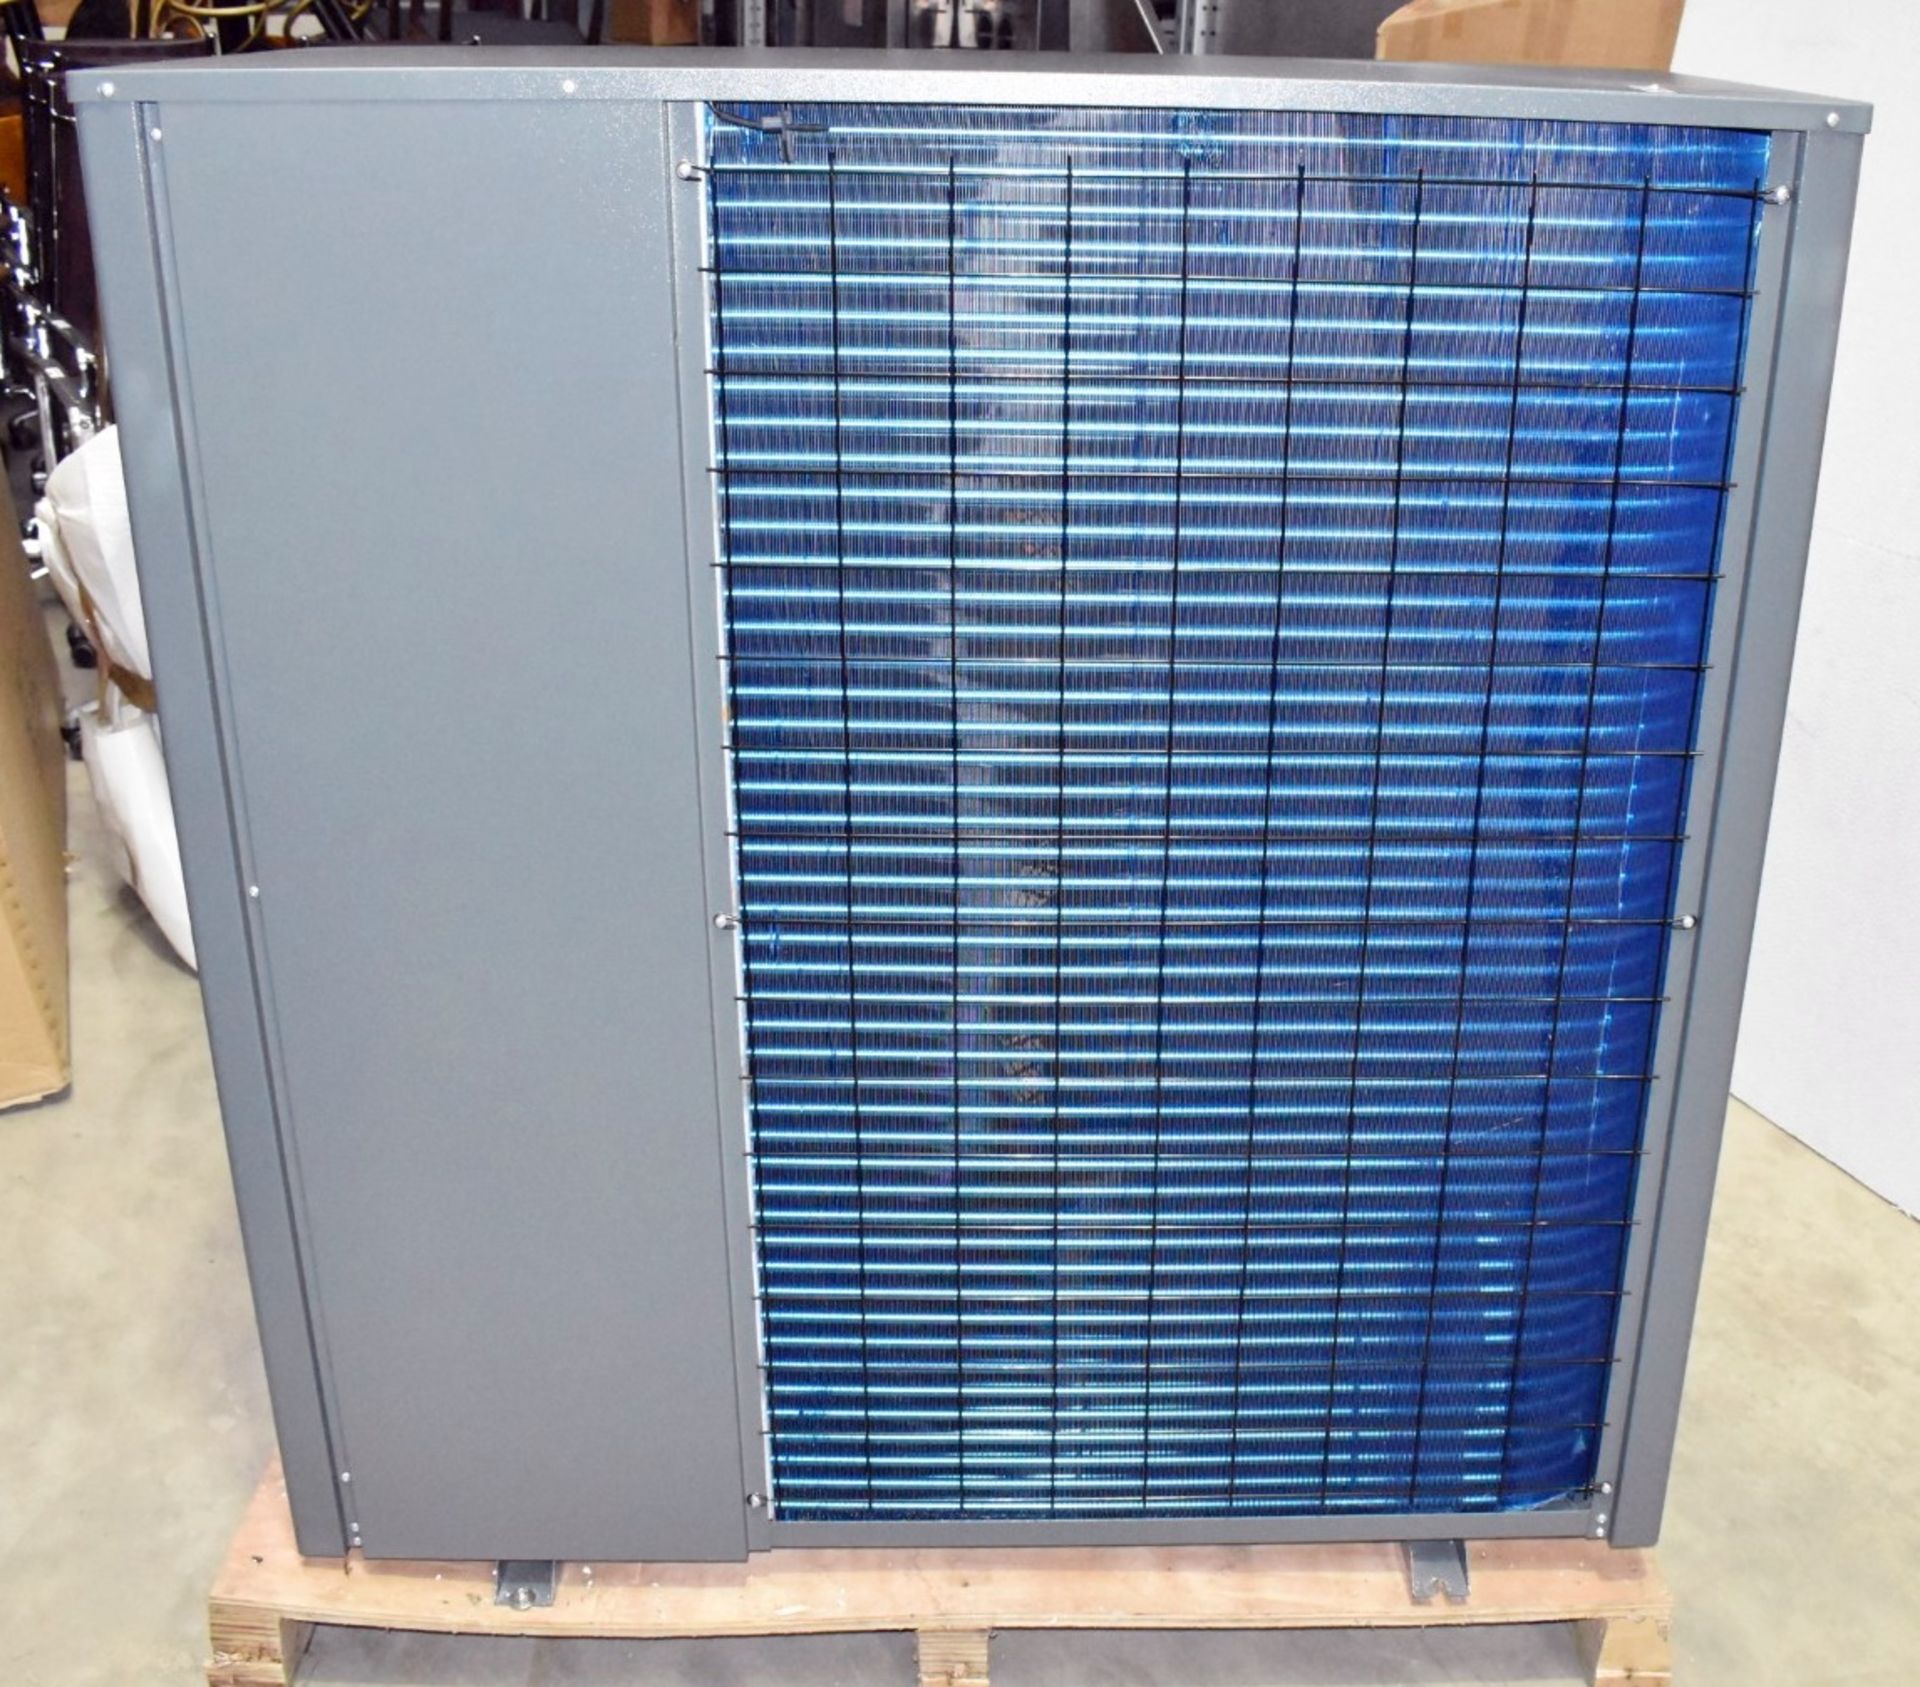 1 x REXMARTINS 'New-Energy 002' 22 kW Air Source Heat Pump (Model BKDX60-220) - New / Unused - Image 10 of 42